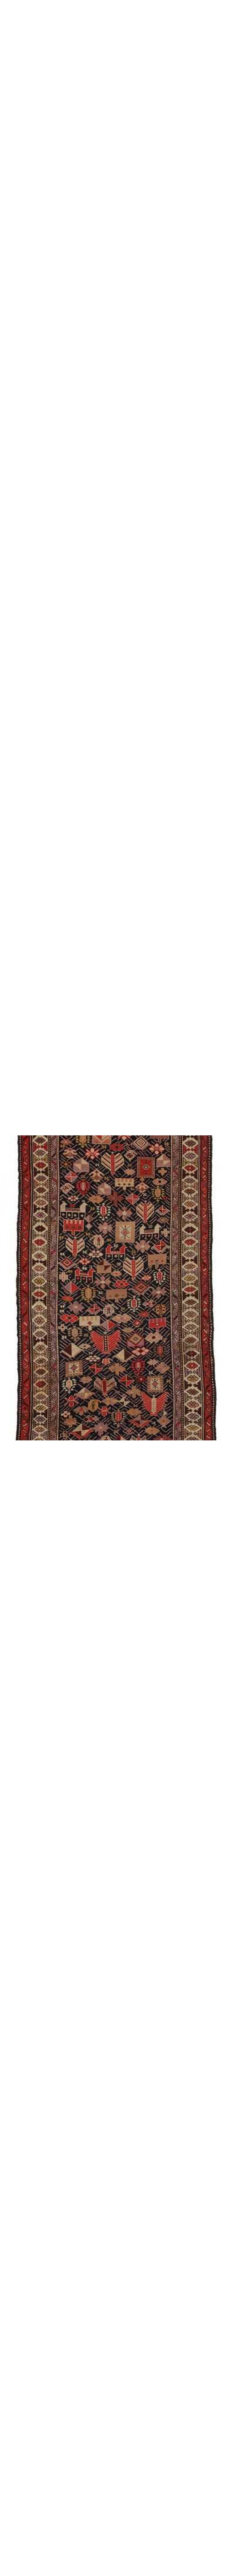 tappeti orientali caucasici